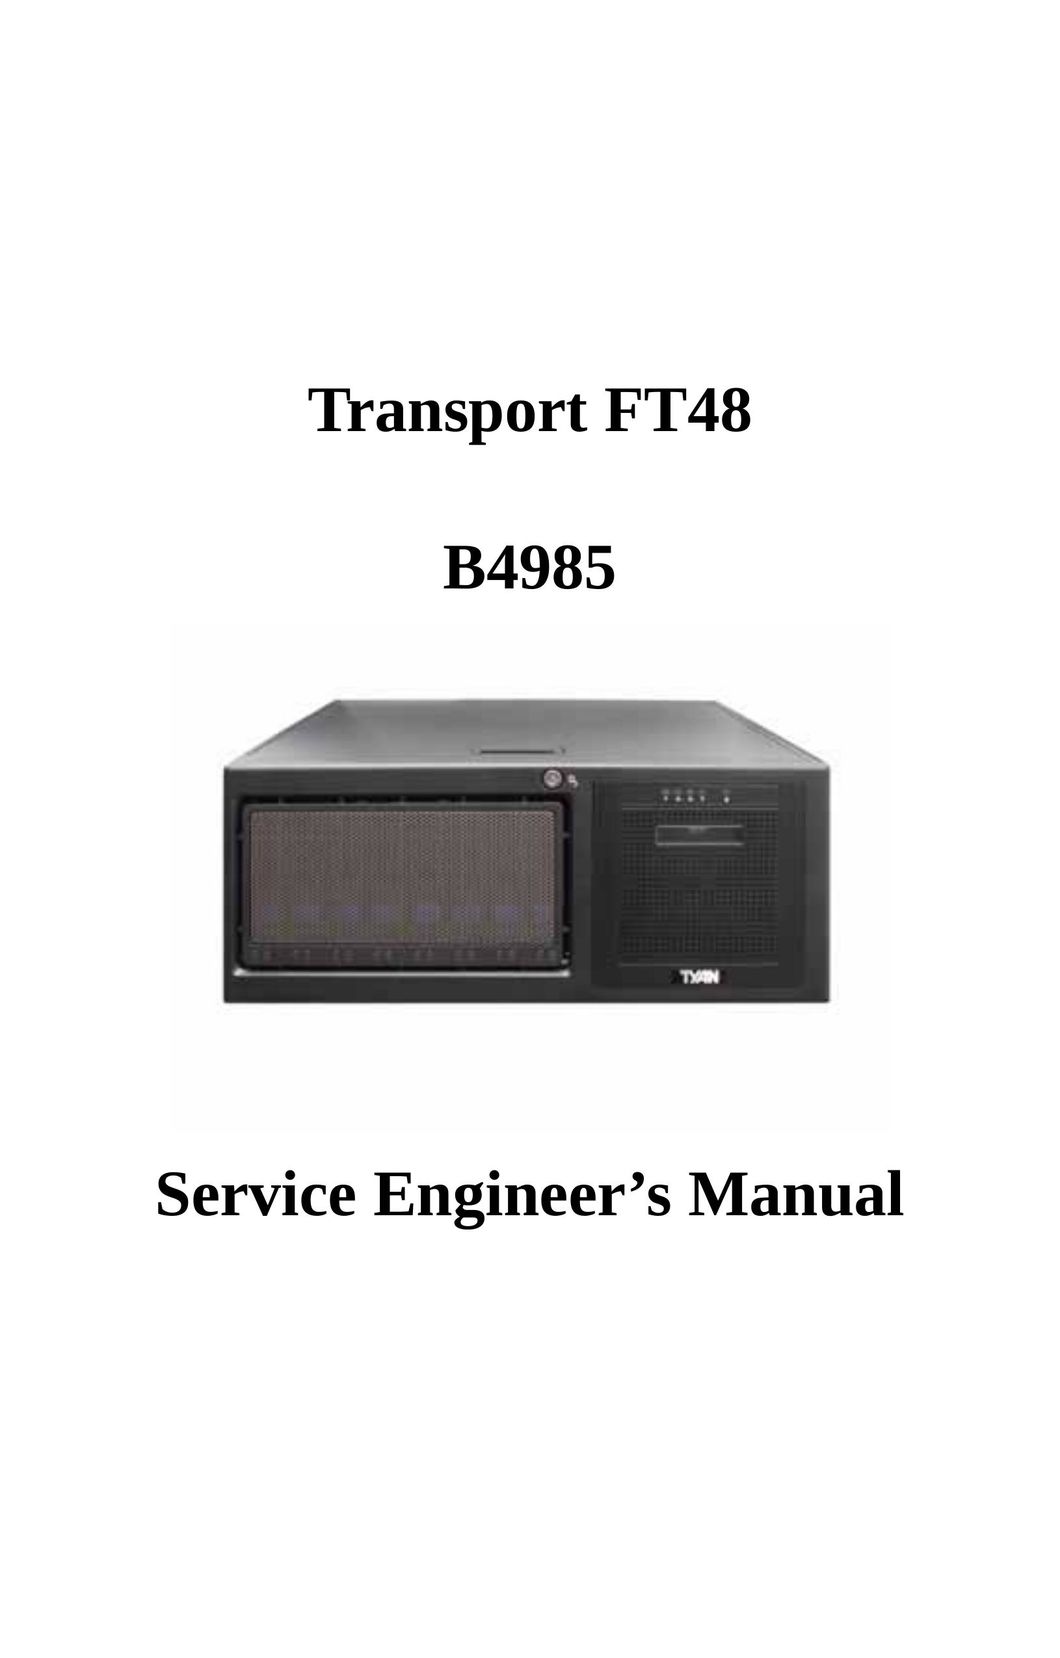 Tyan Computer B4985F48V8HR (Tower) Computer Hardware User Manual